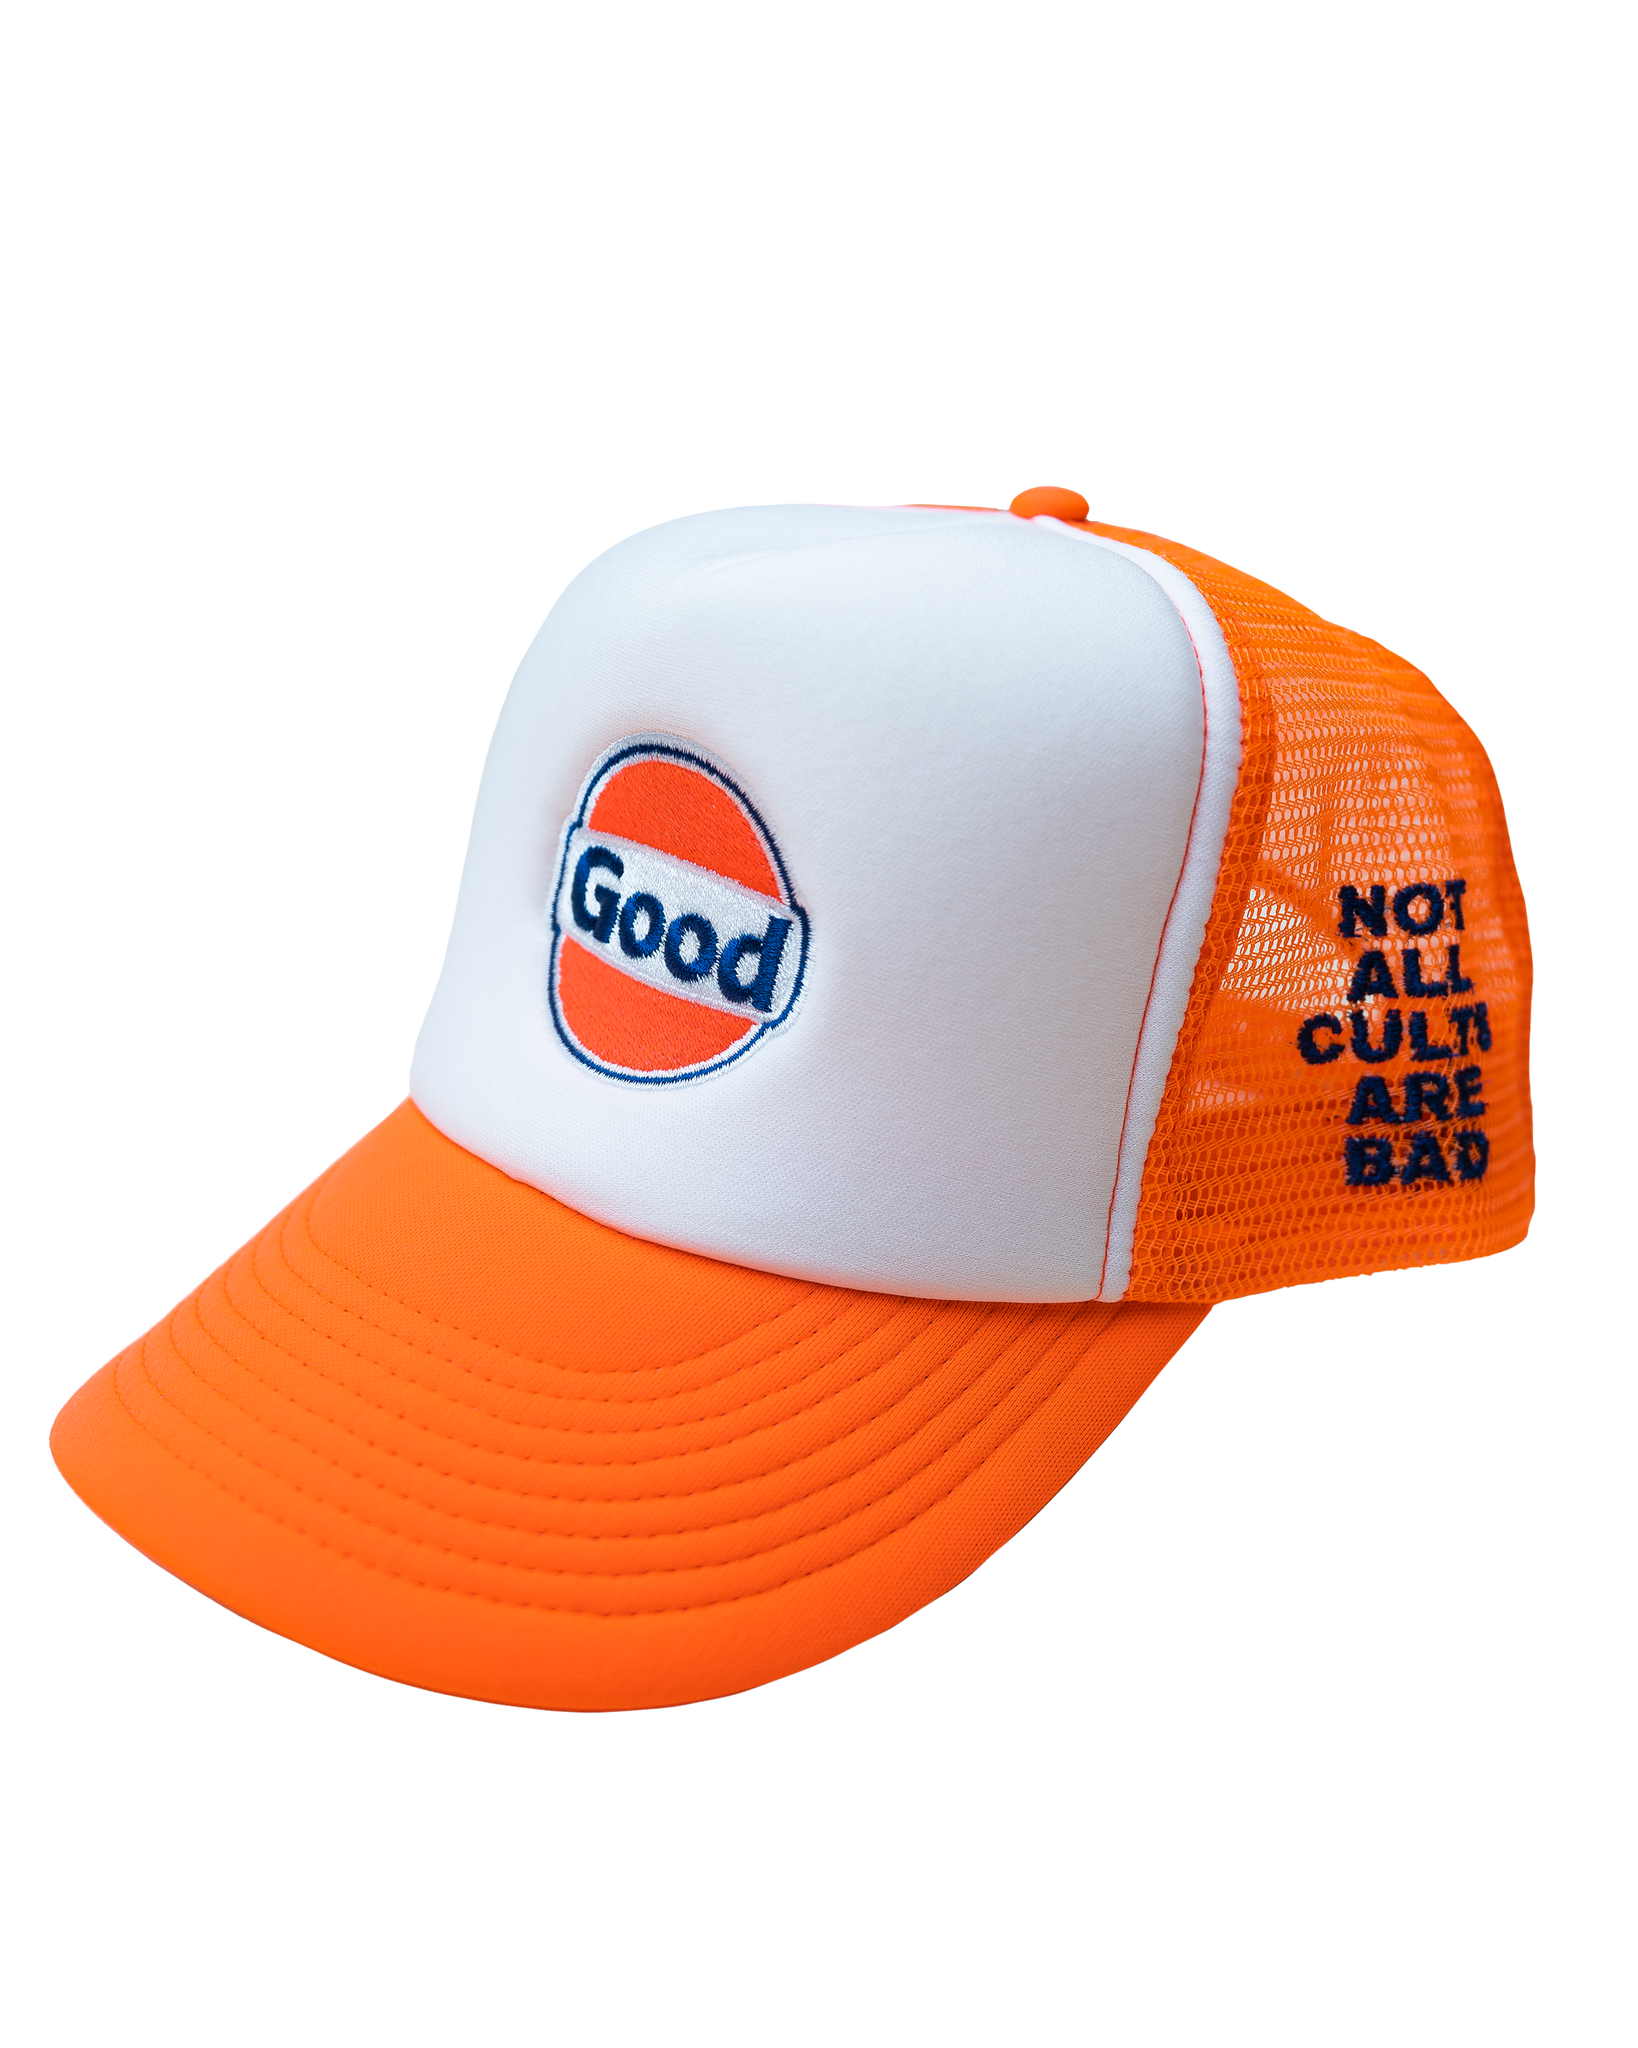 THE GOOD HAT